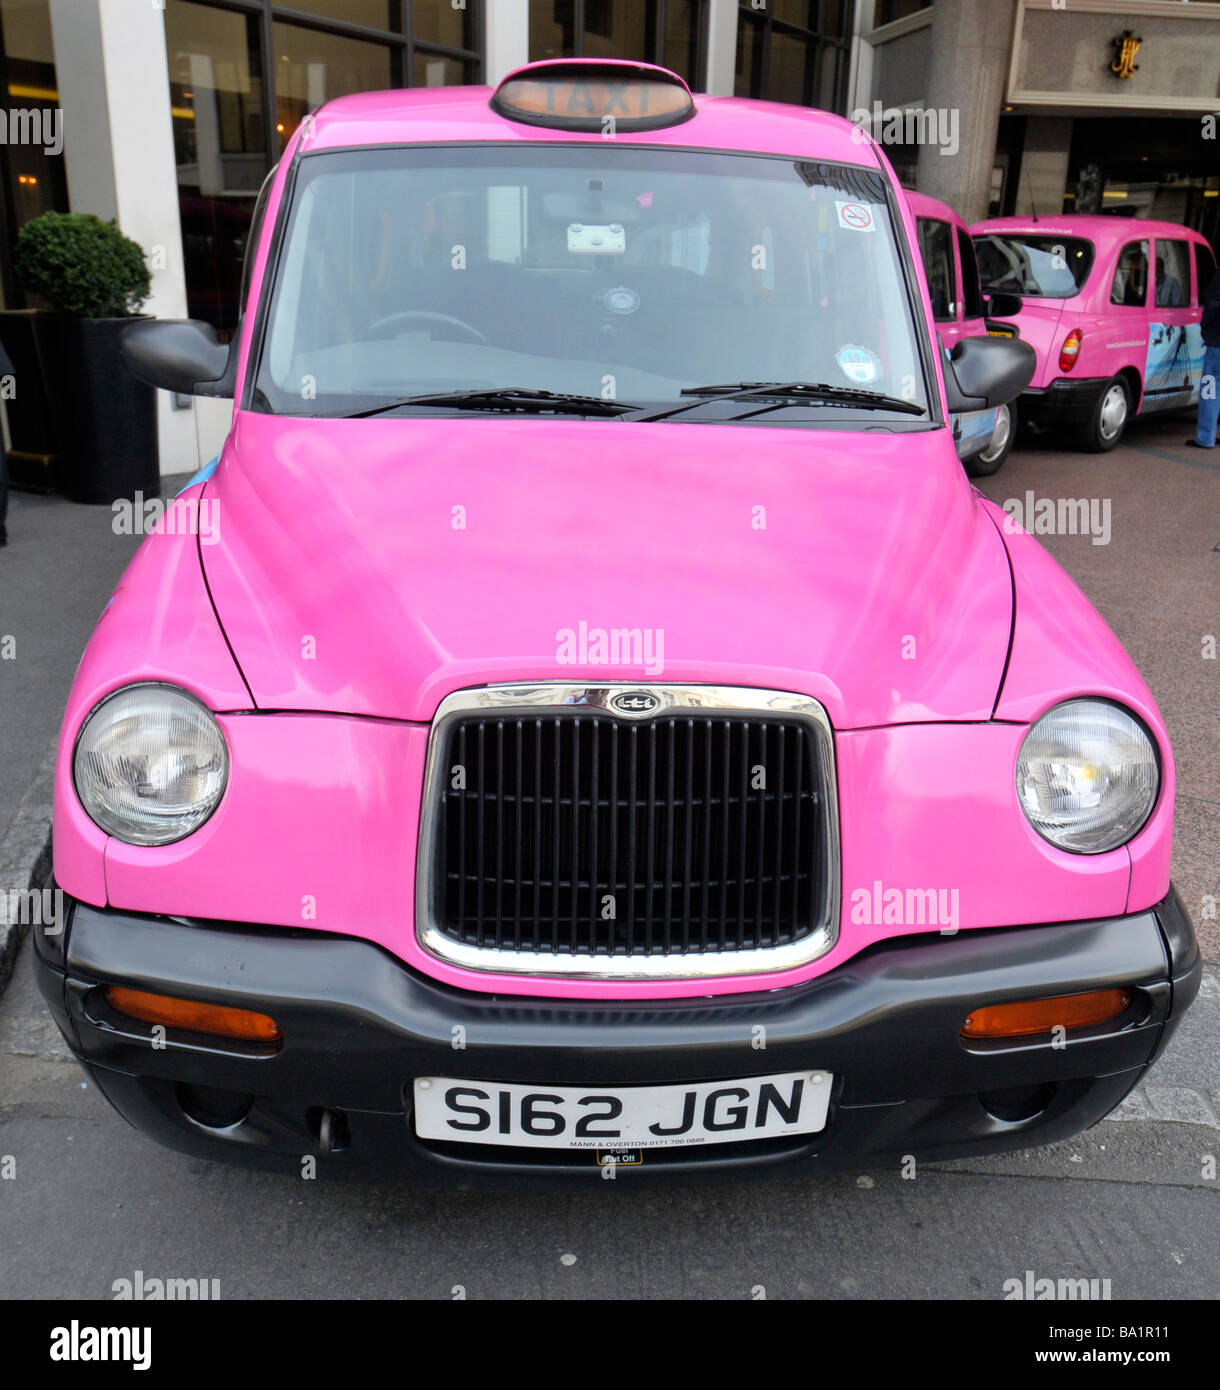 Pink London taxi cab Stock Photo